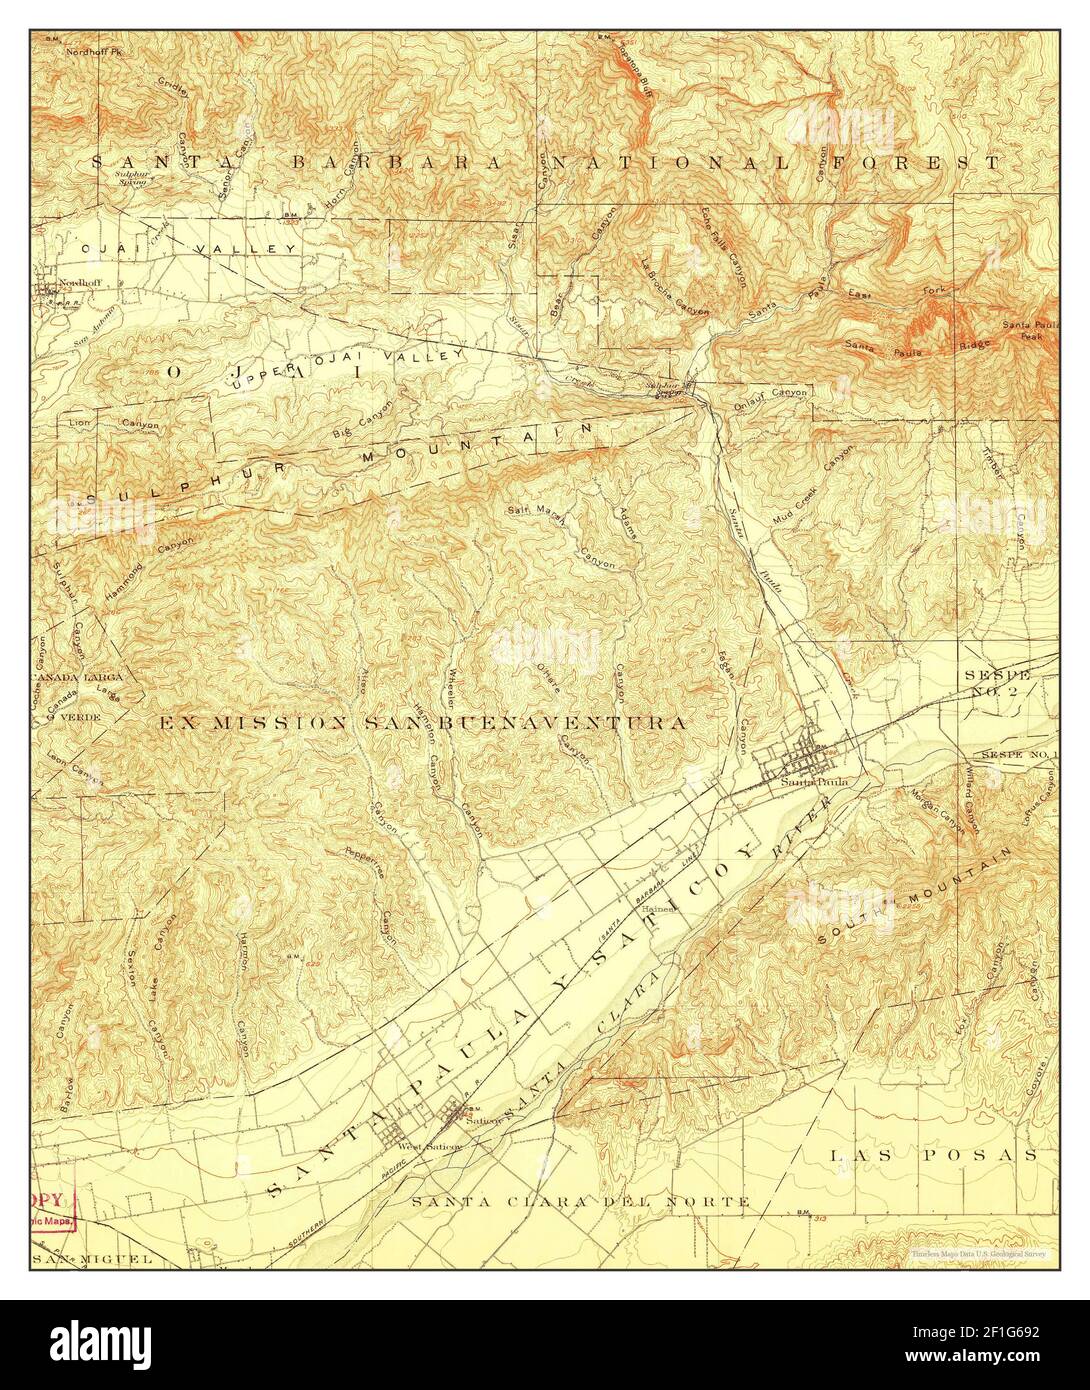 Santa Paula, California, map 1903, 1:62500, United States of America by Timeless Maps, data U.S. Geological Survey Stock Photo